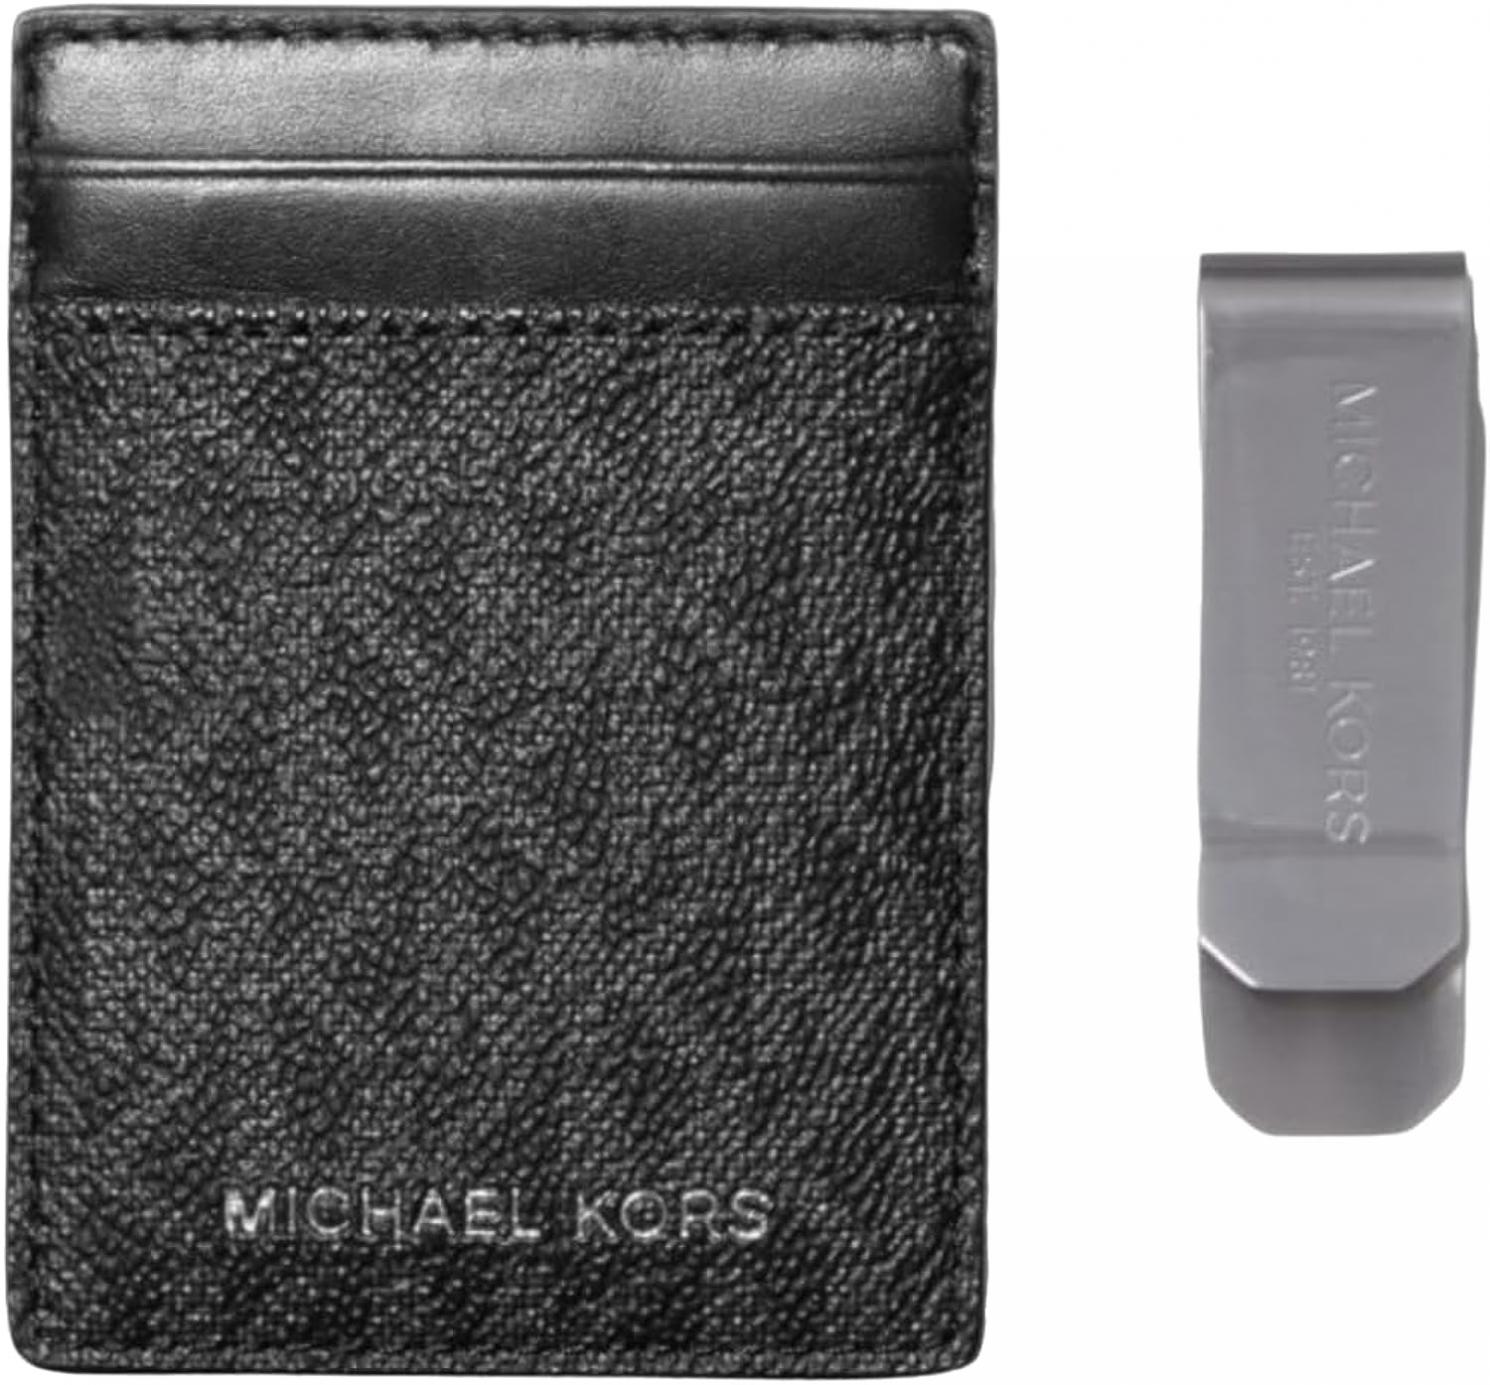 Michael Kors Men’s Gifting Money Clip Card Case Box Set (Black, OS)